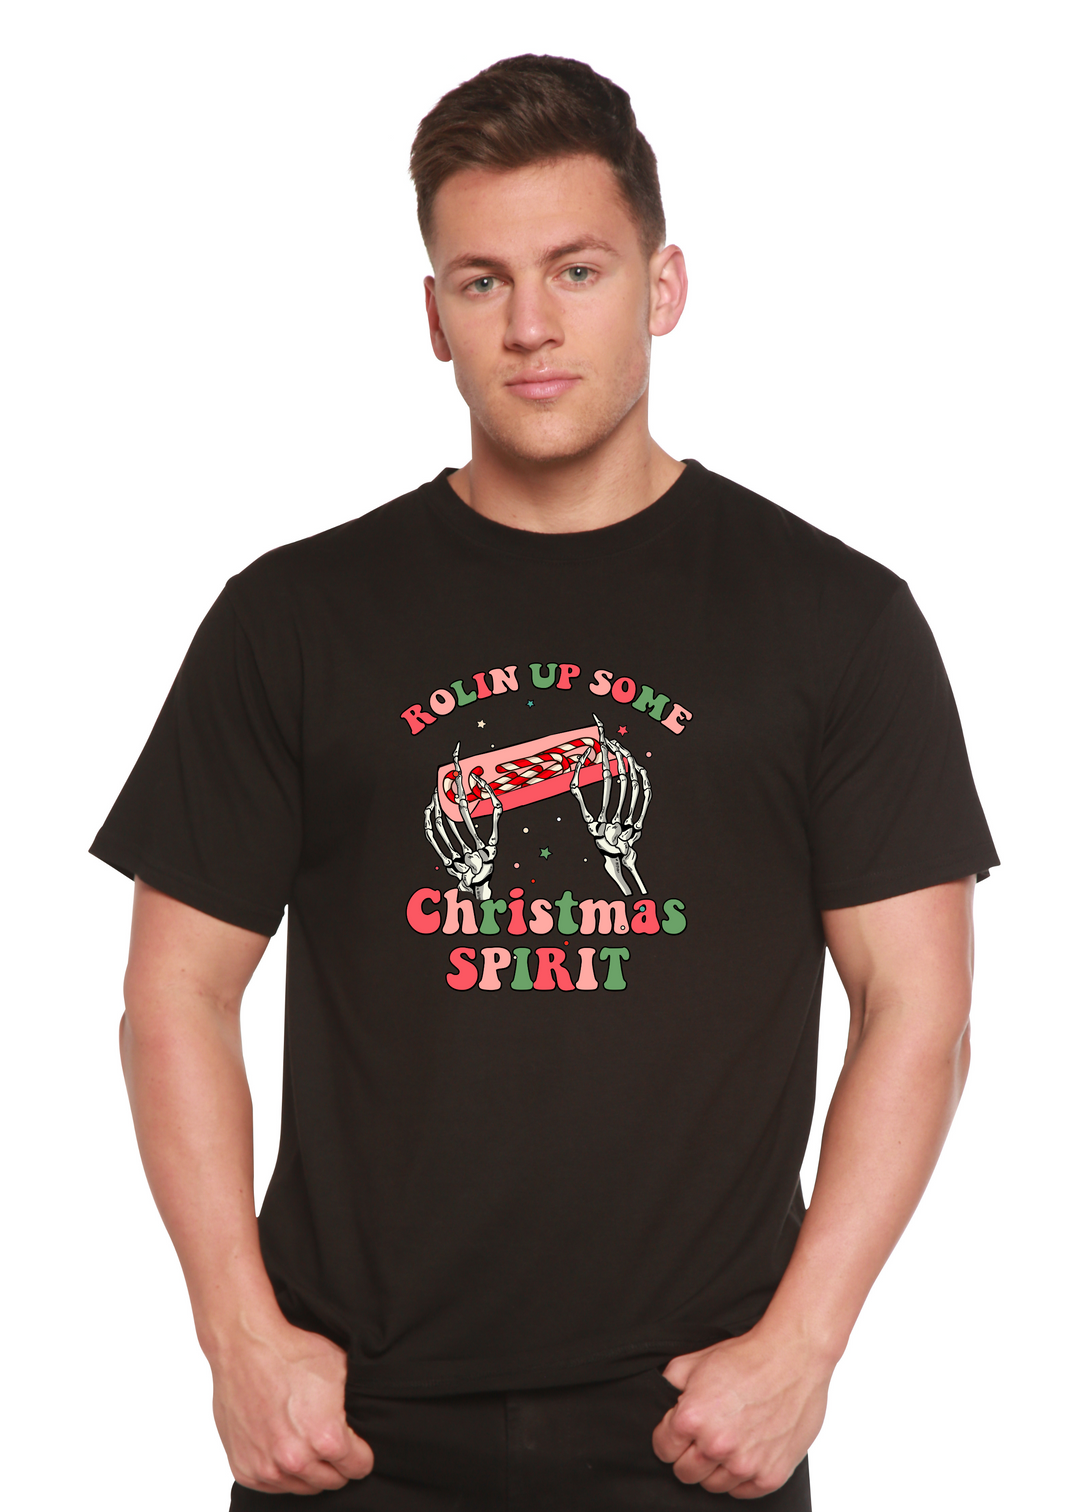 Rolin Up Some Christmas Spirit Unisex Graphic Bamboo T-Shirt black